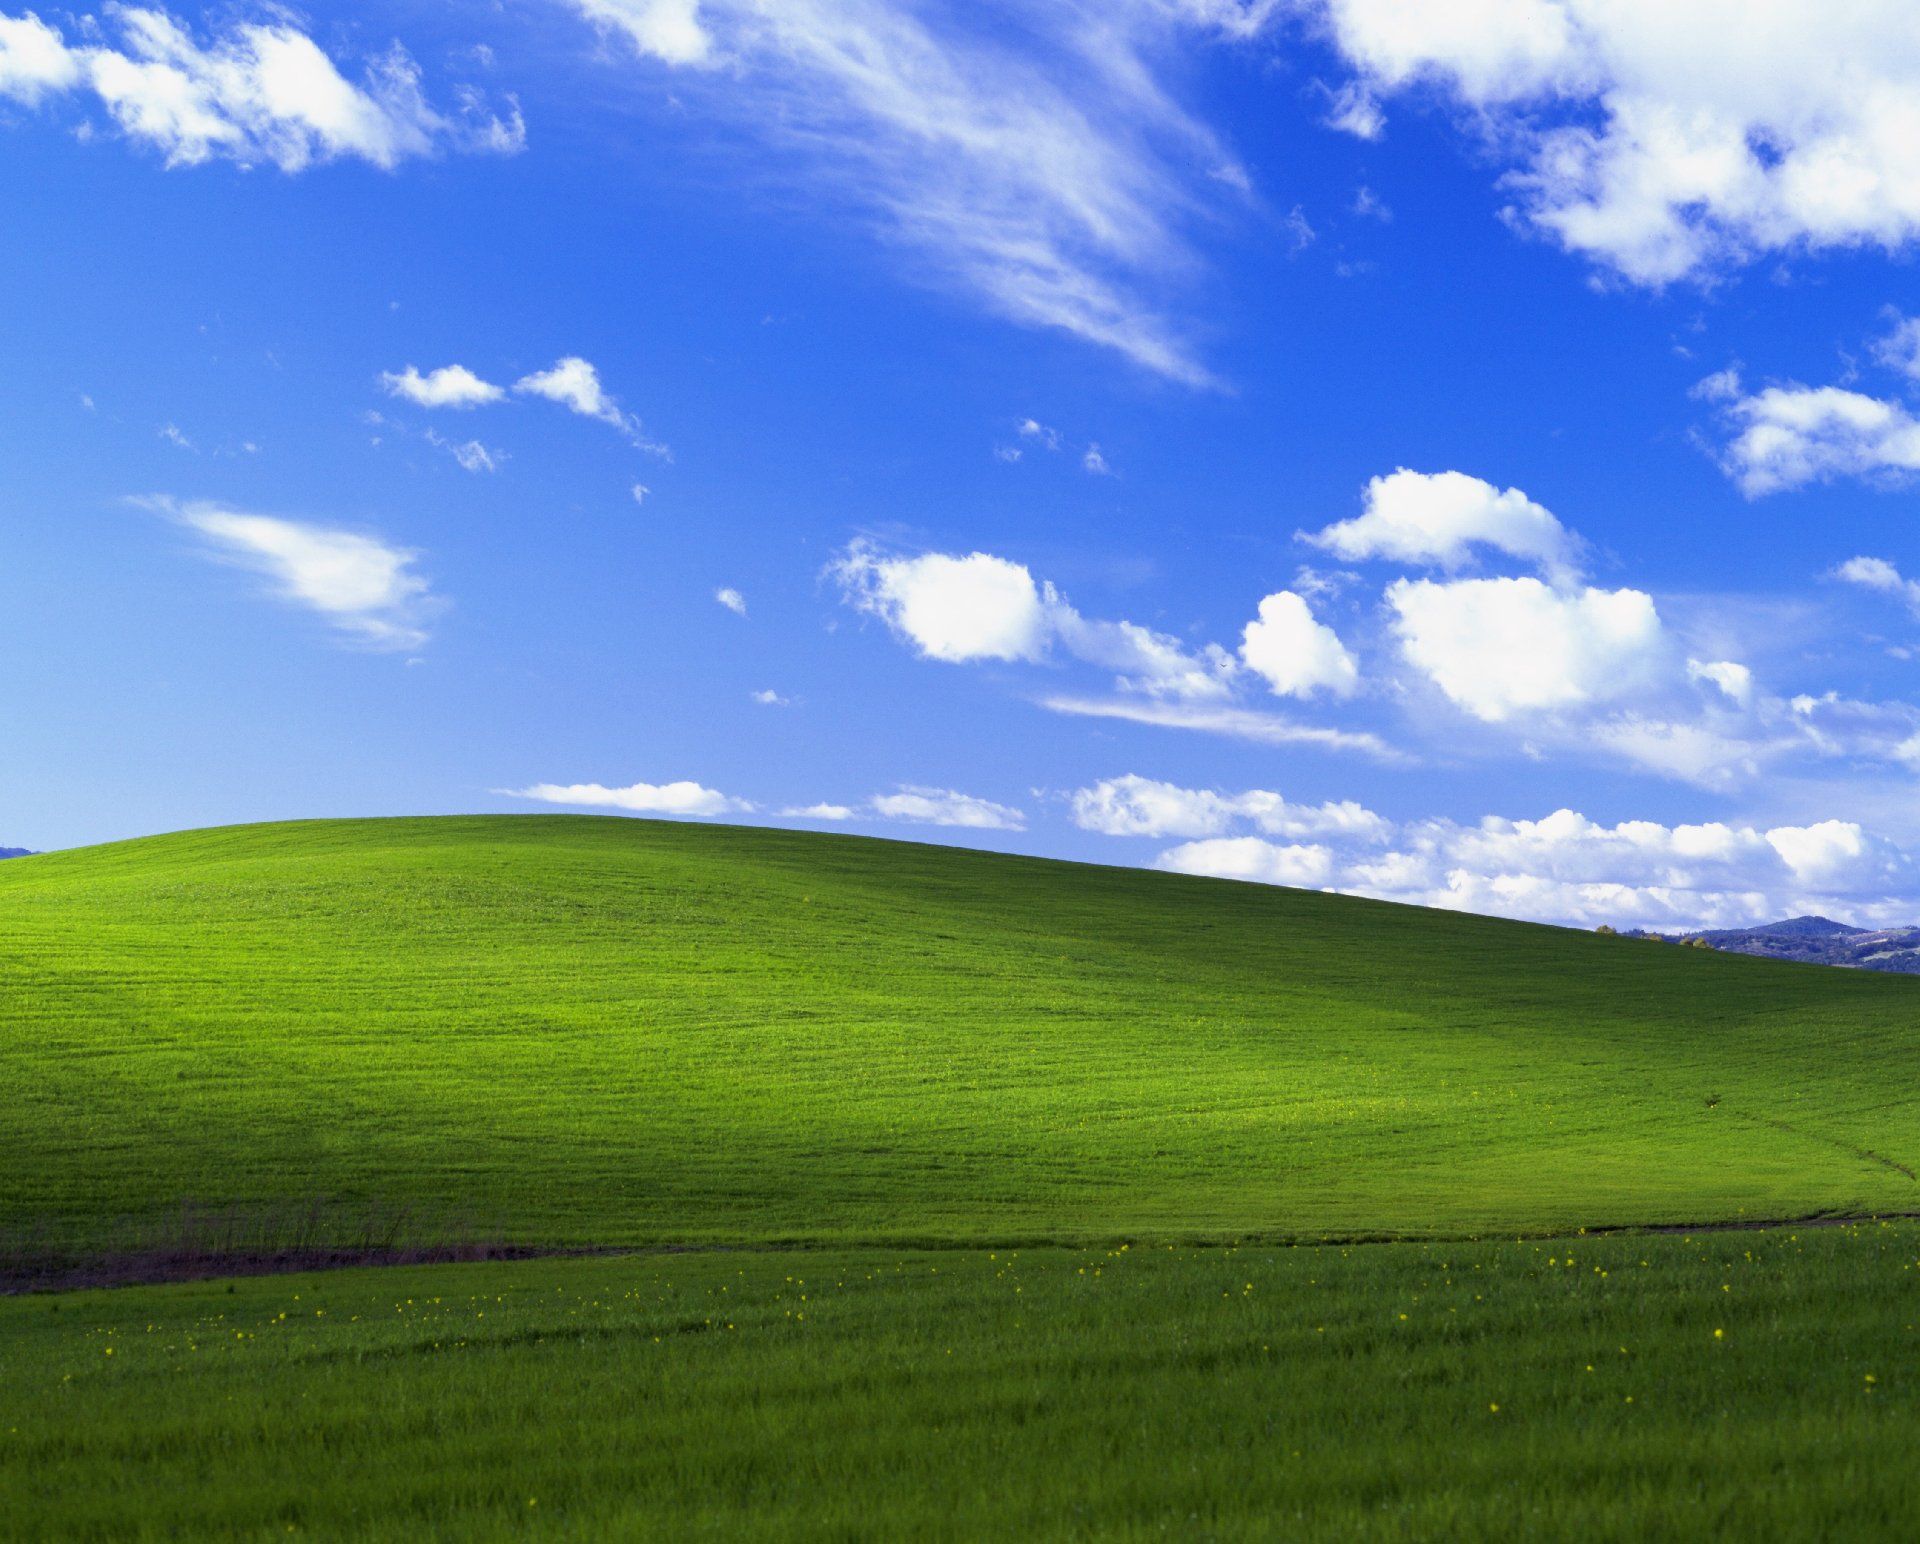  Windows XP Hintergrundbild 1920x1544. Windows Aesthetics on X: The hill in Windows XP's Bliss wallpaper over the years: a thread. 1: 1996 2: 2006 3: 2007 4: 2010 / X